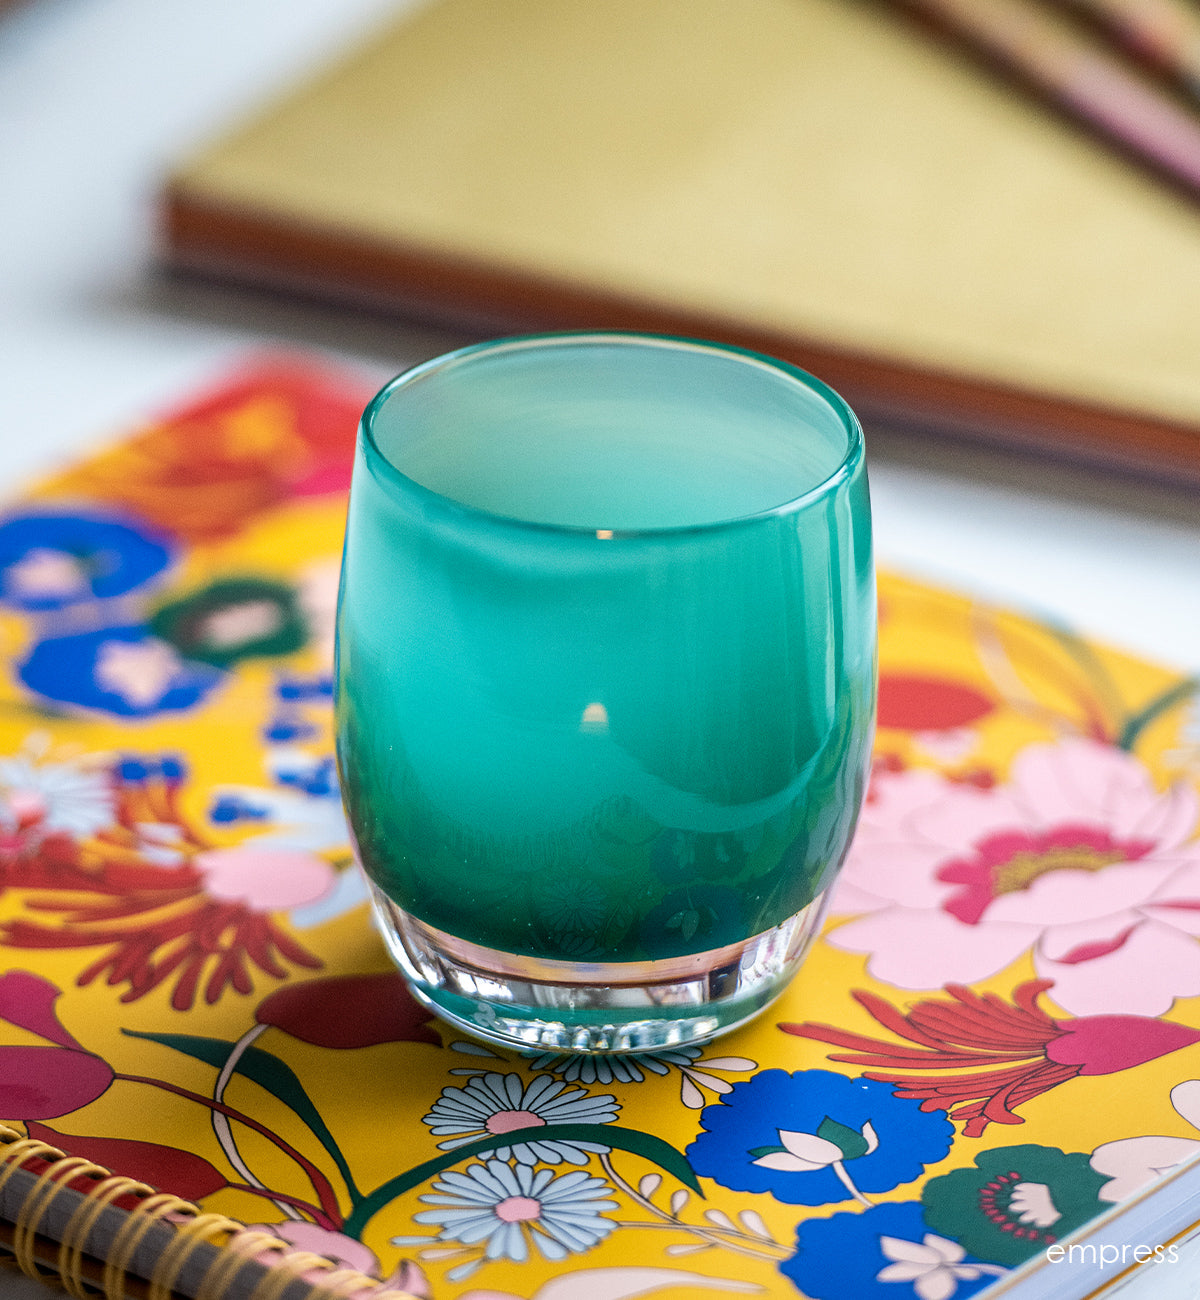 empress is a beautiful elegant green, hand-blown glass votive candle holder.